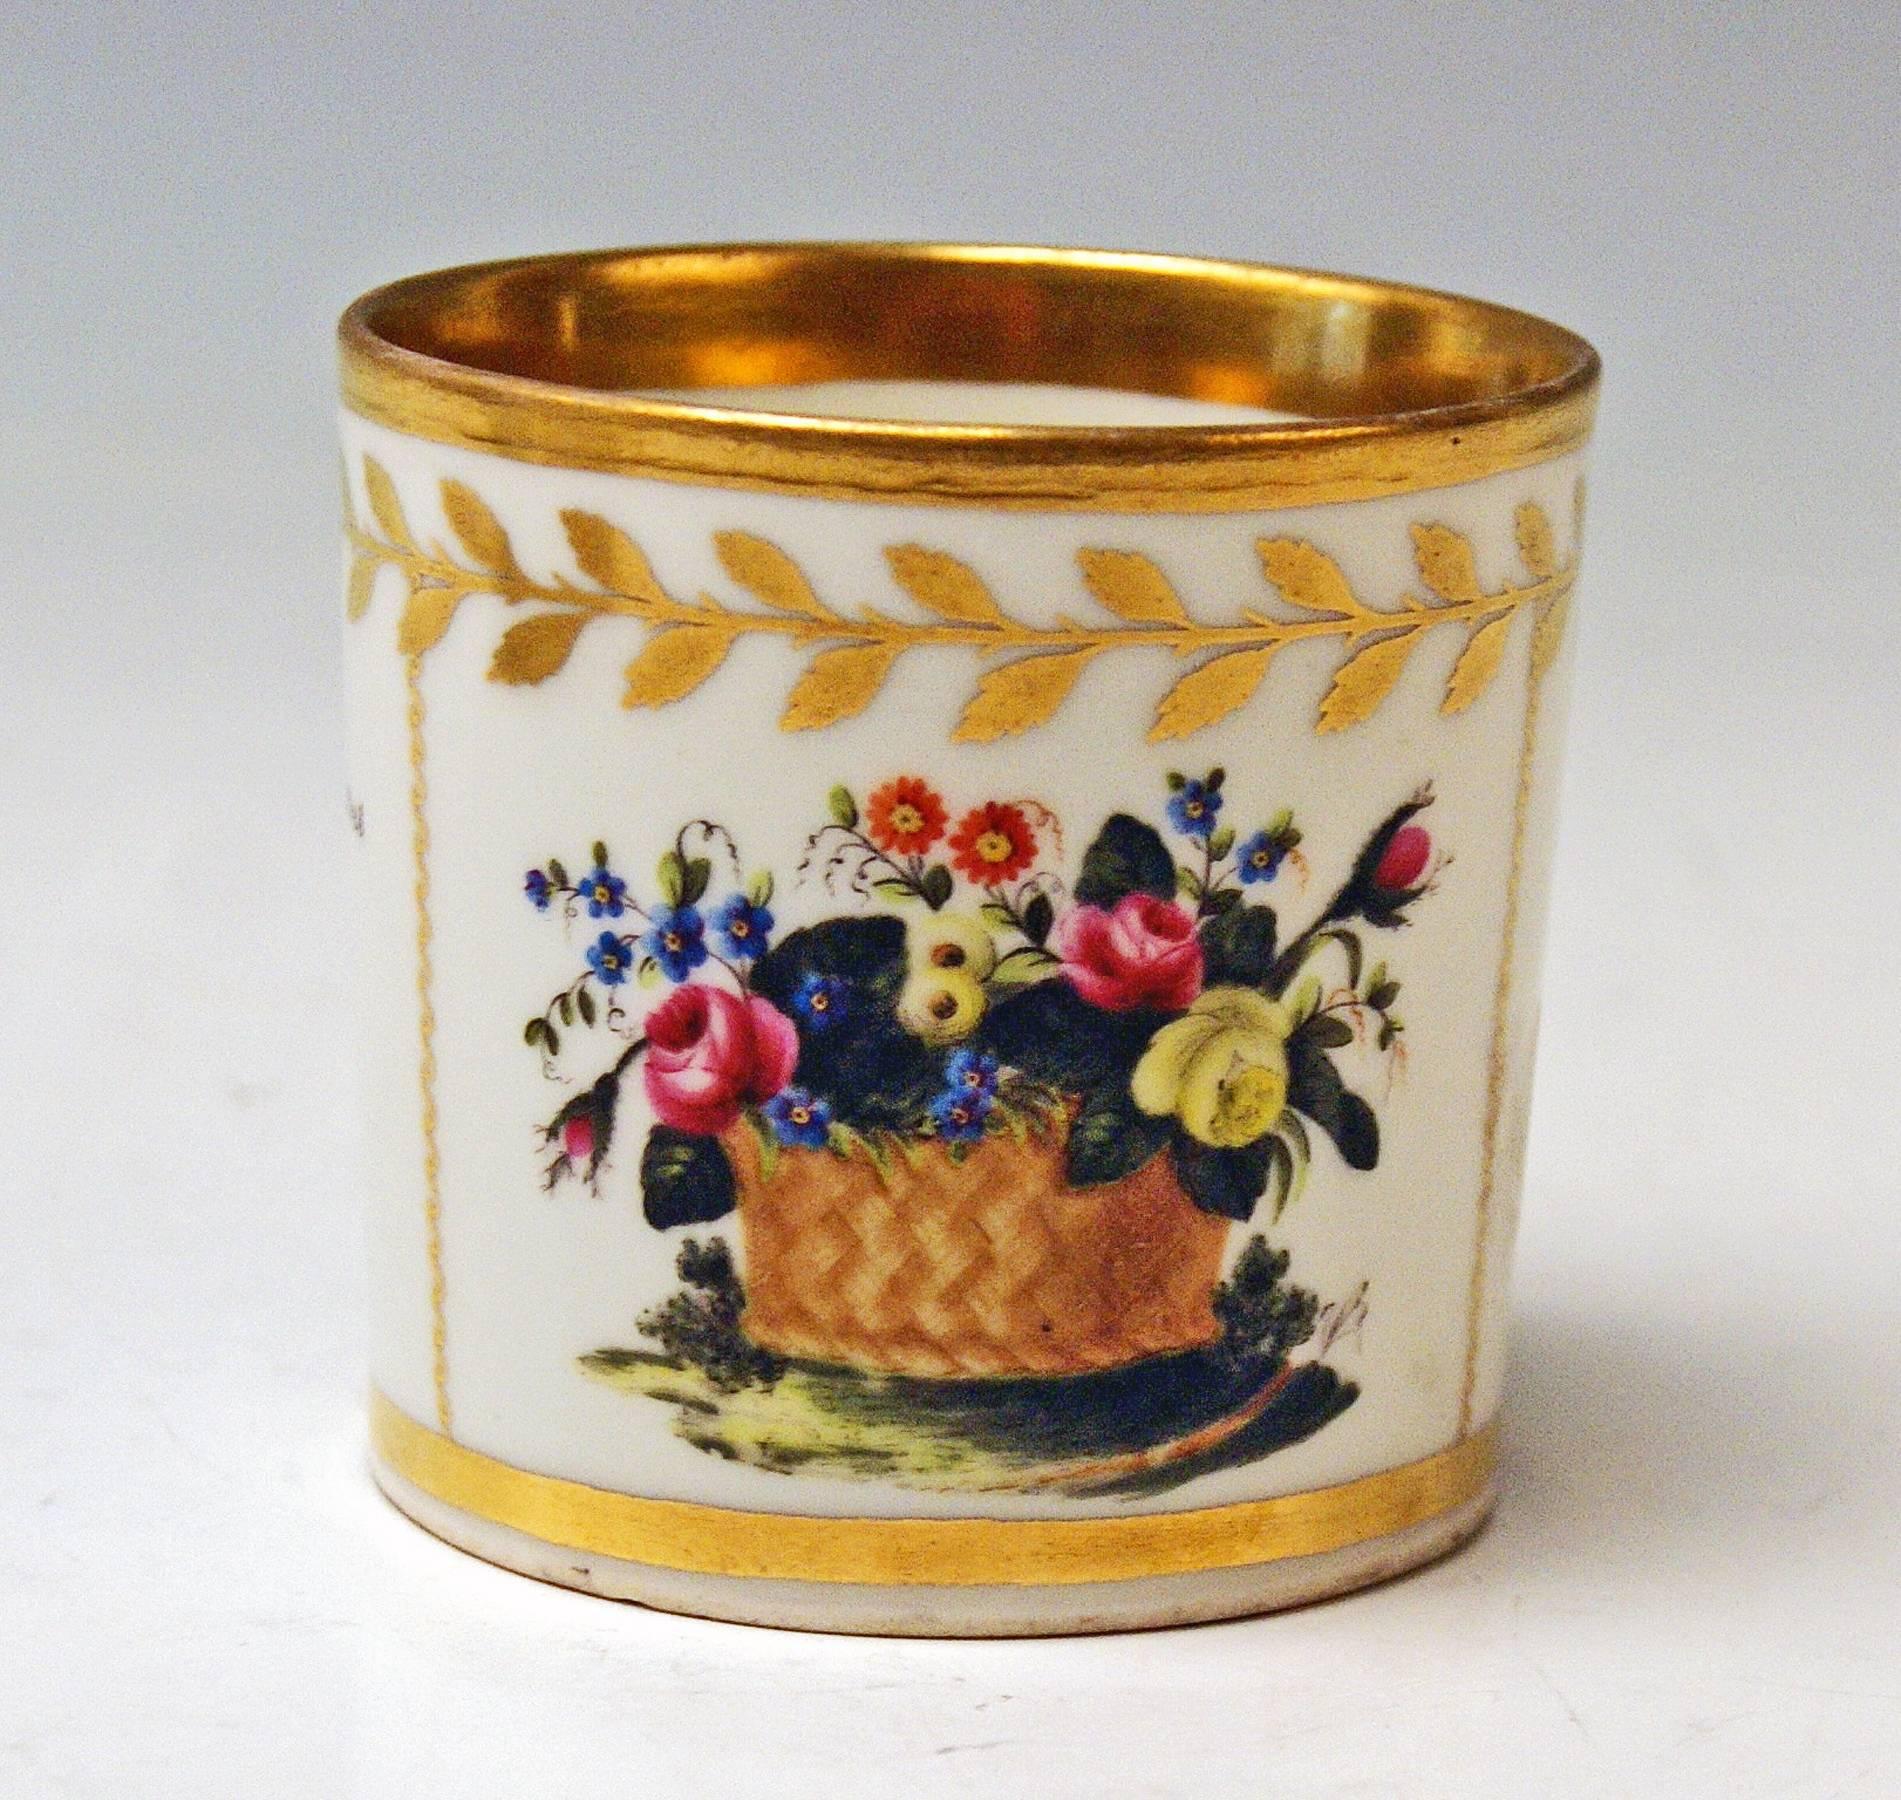 Biedermeier Vienna Imperial Porcelain Cup Saucer Golden Ornaments Dictum and Flowers, 1816